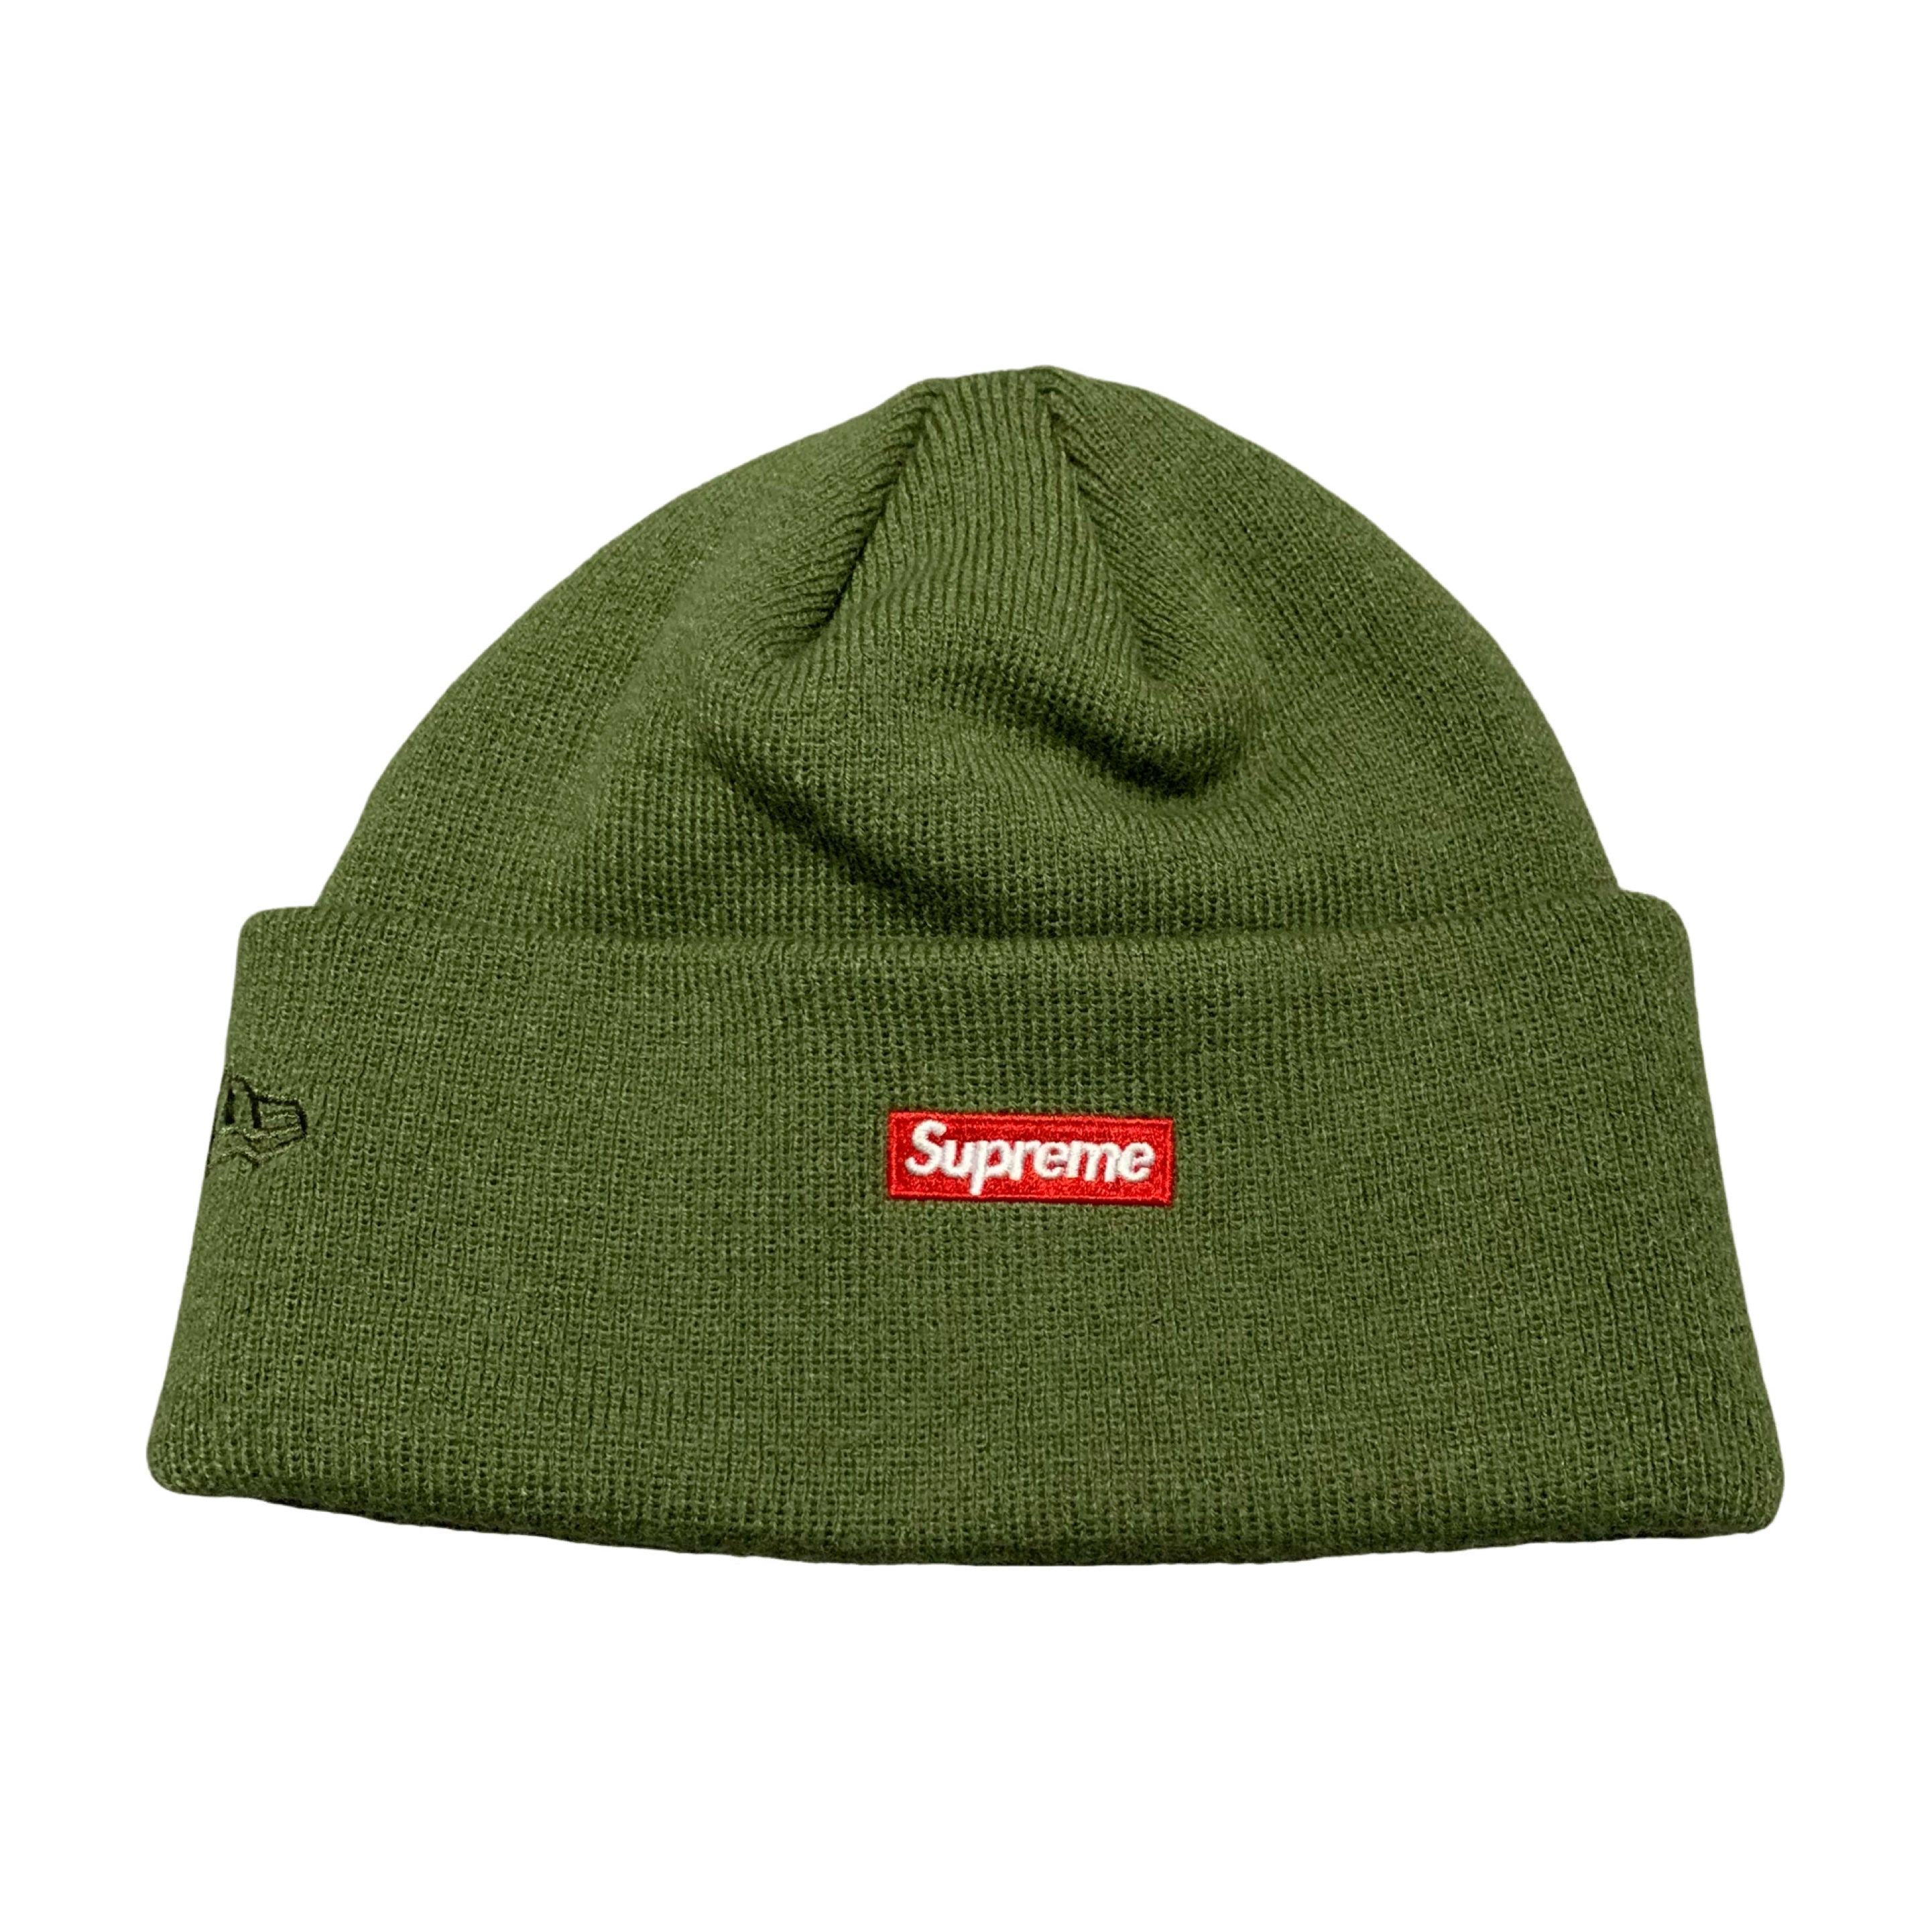 Supreme Beanie Yohji Yamamoto Khaki Green Beanie Hat